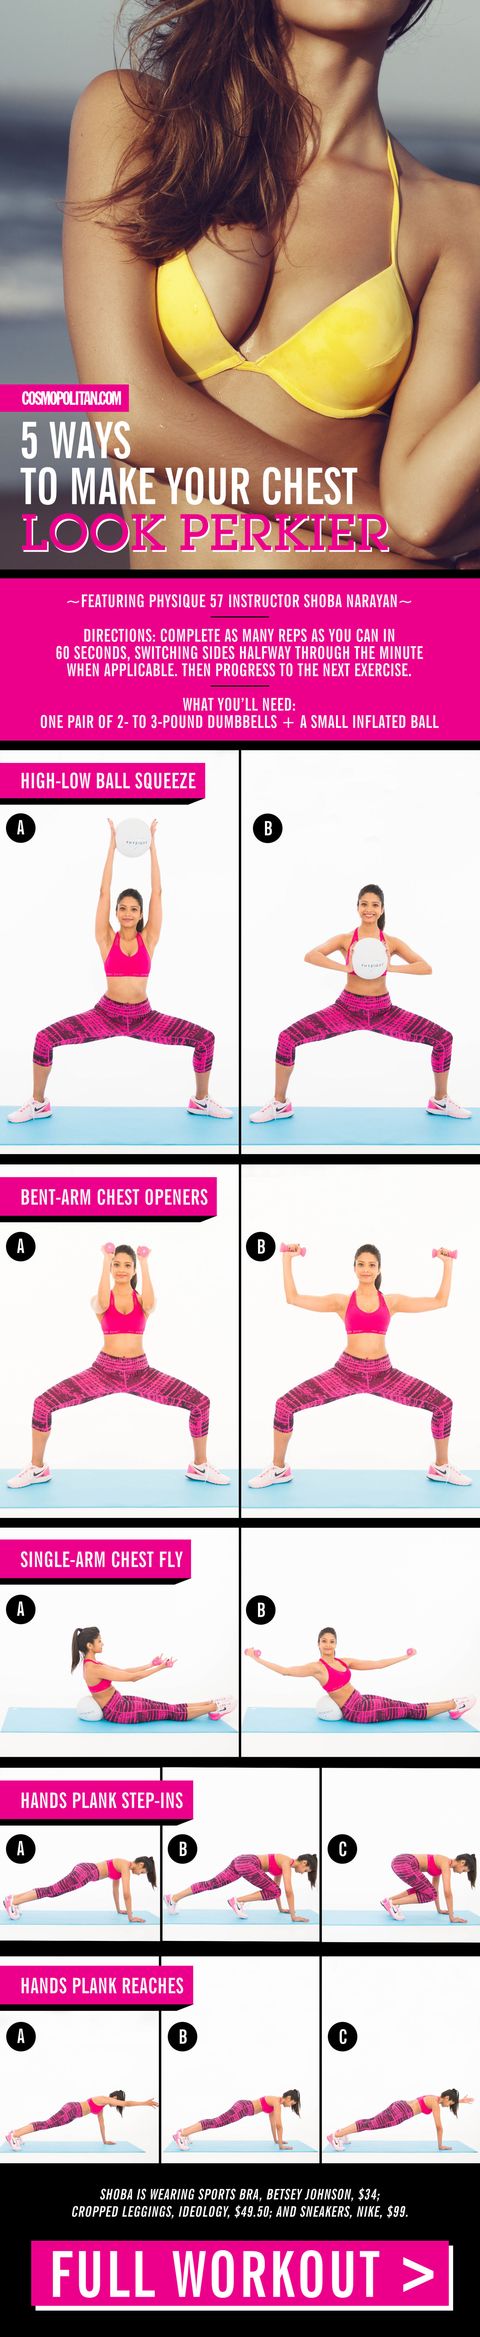 Exercises to make your boobs perkier